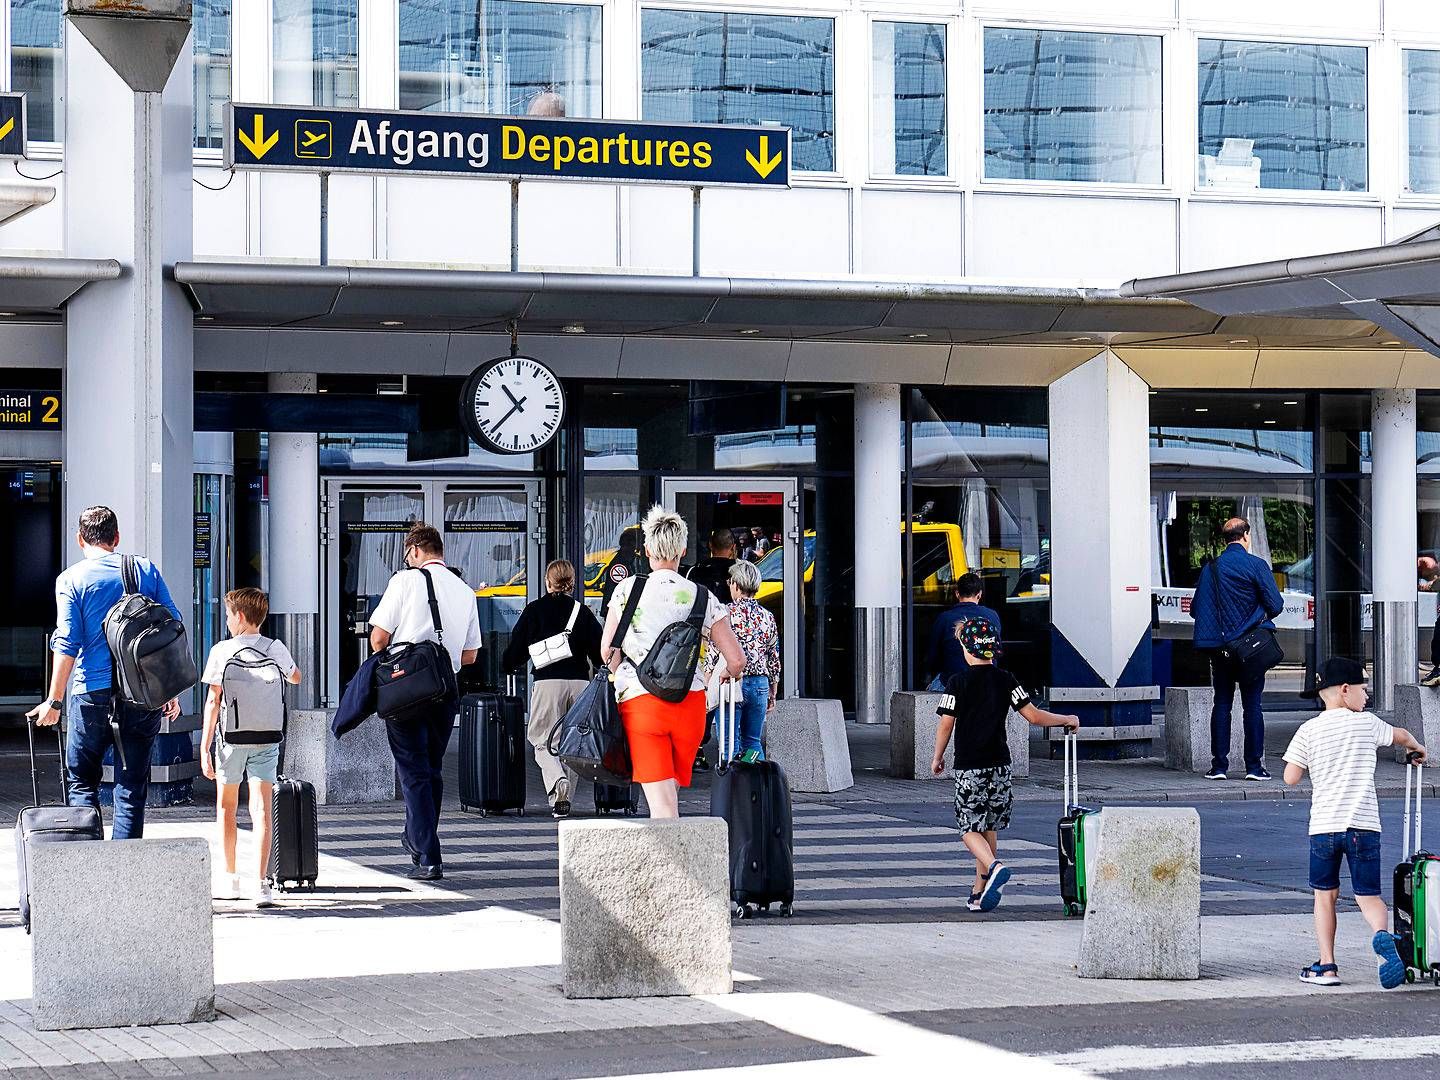 Lufthavne i hele Europa mærker de lavere passagertal. | Foto: Claus Bech/Ritzau Scanpix